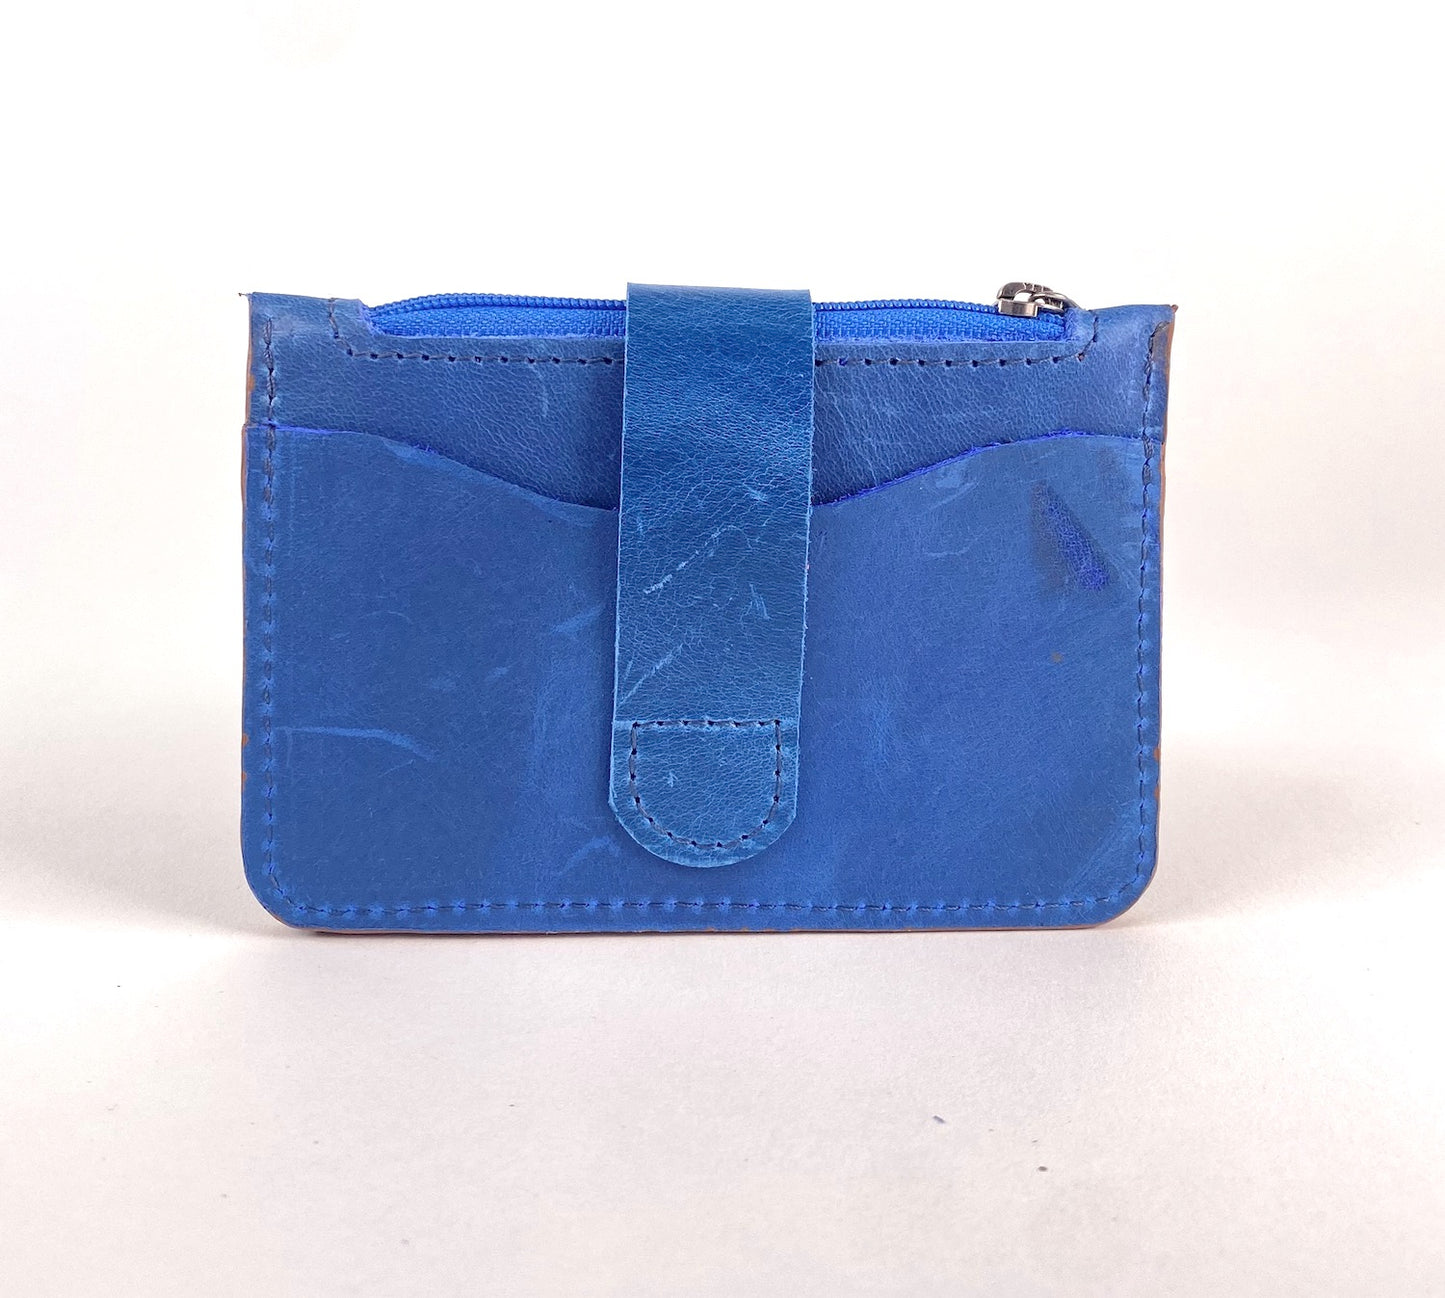 CardGuard Minimalist Leather Wallet in Brilliant Blue